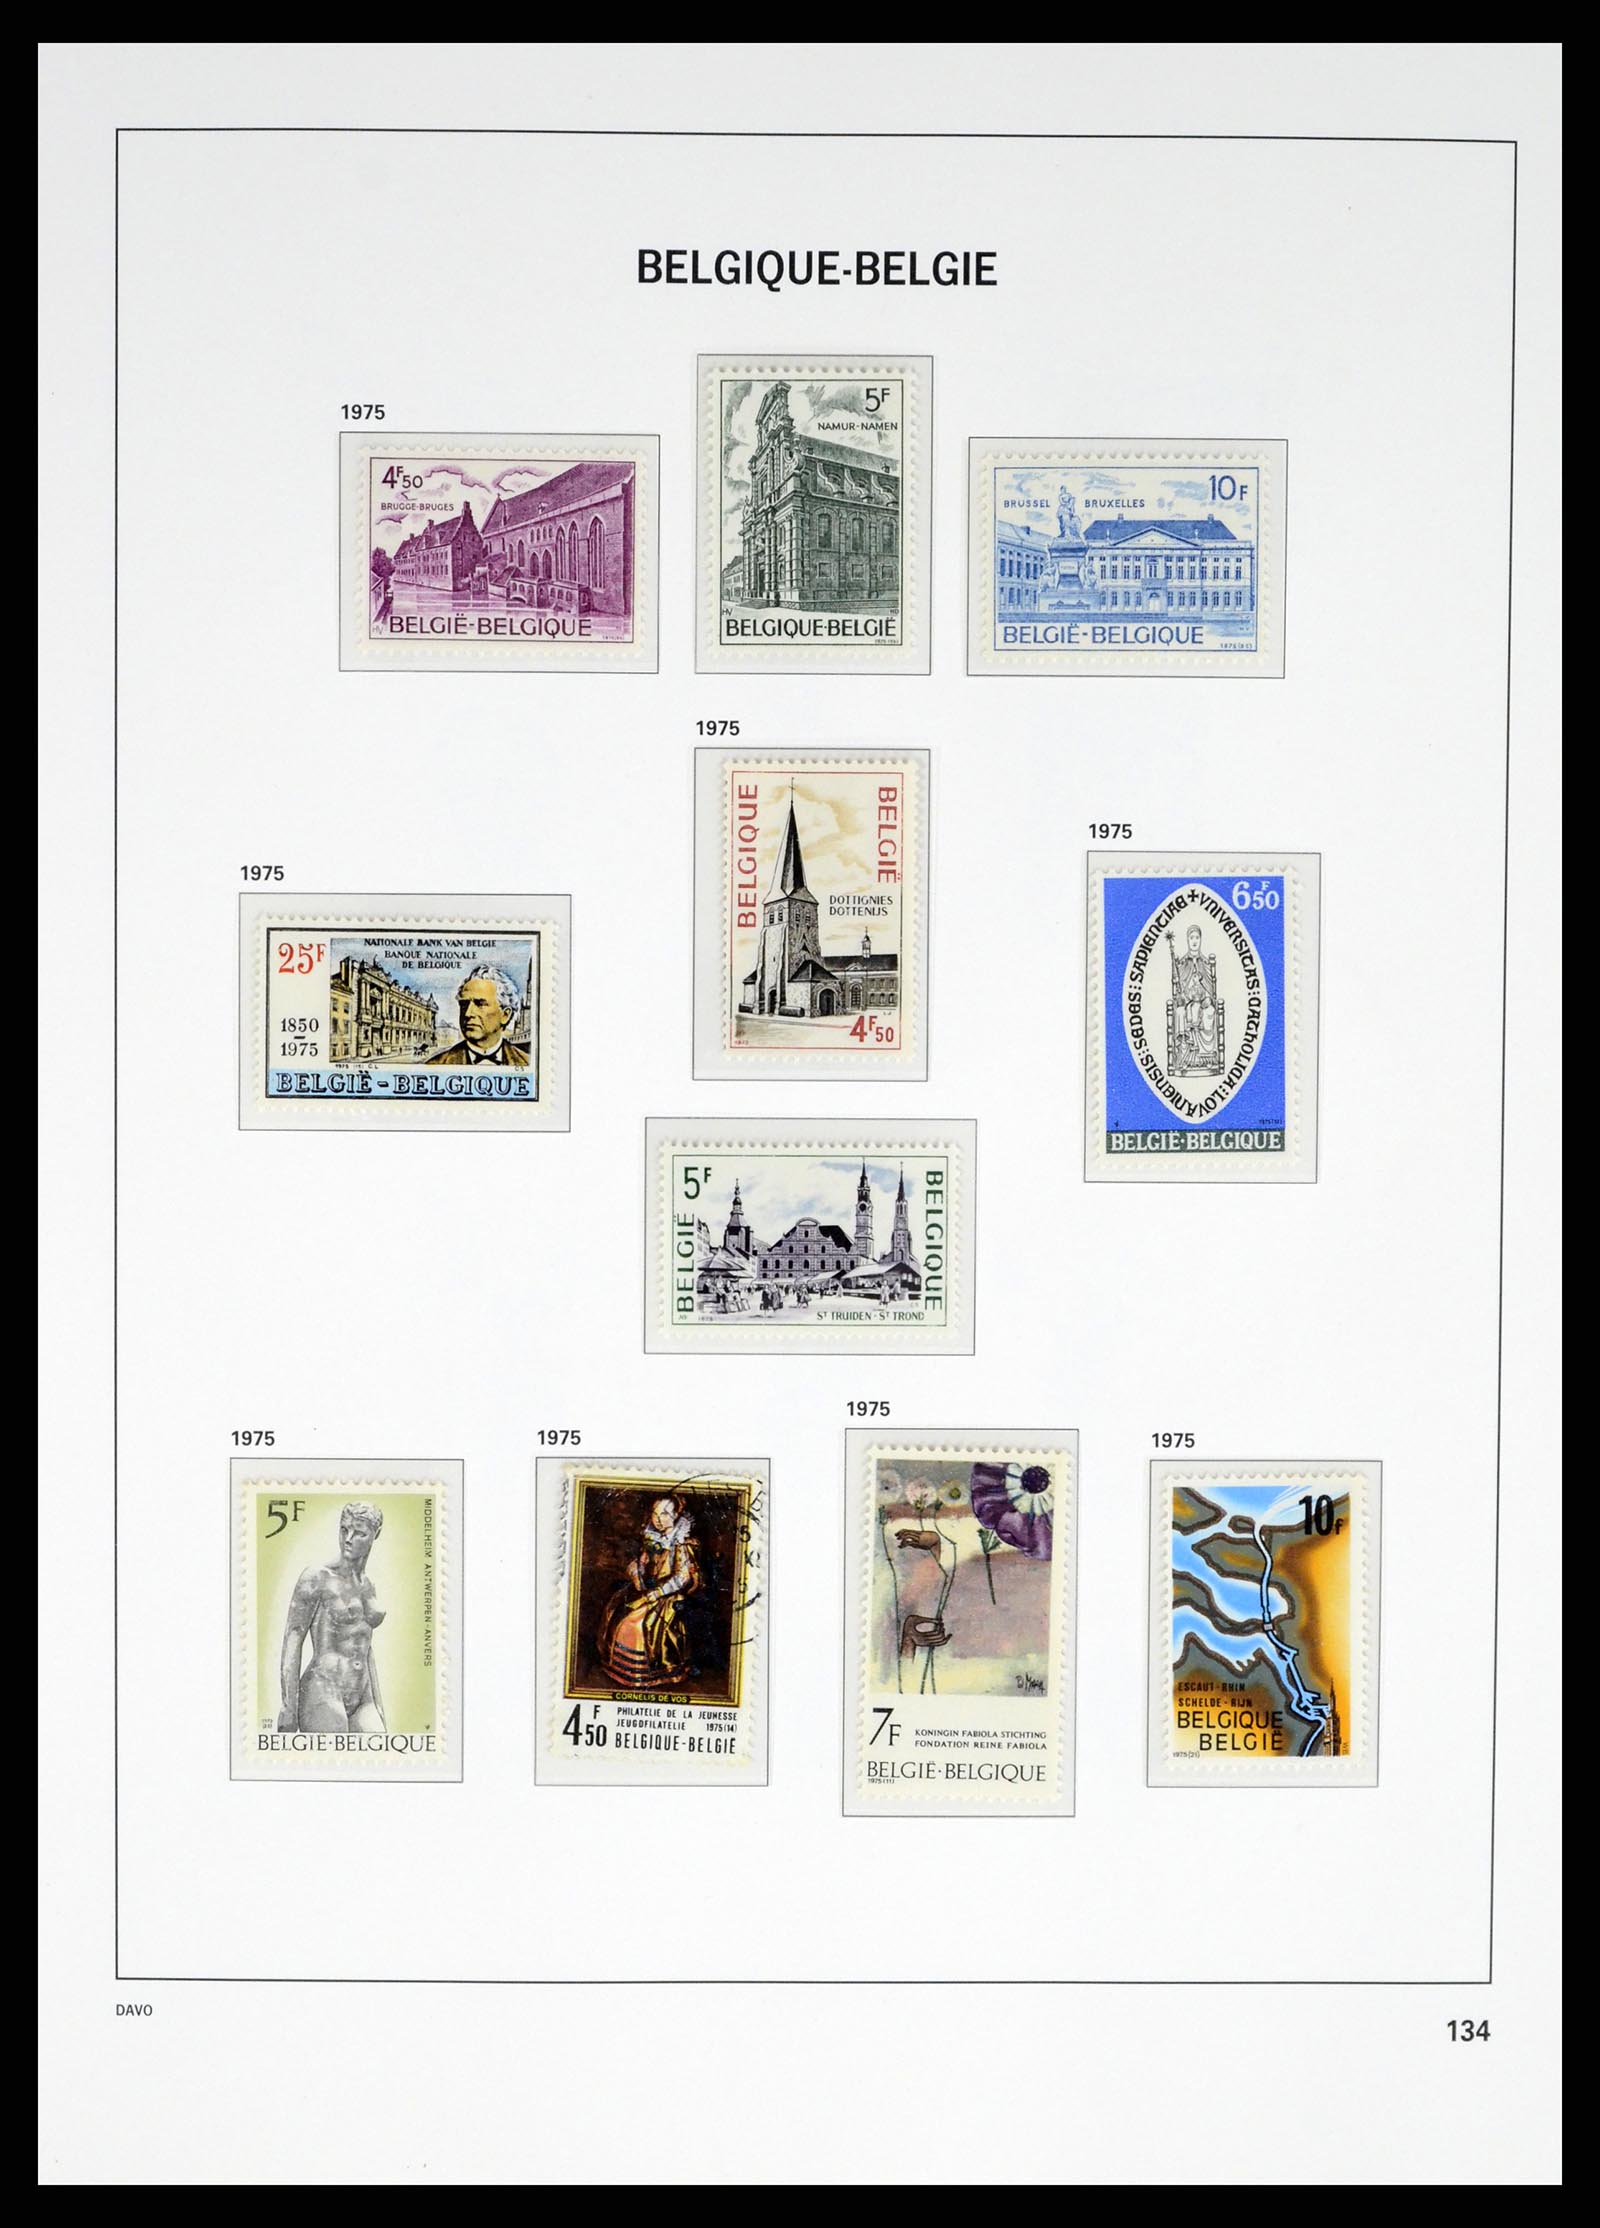 37368 023 - Stamp collection 37368 Belgium 1969-2003.